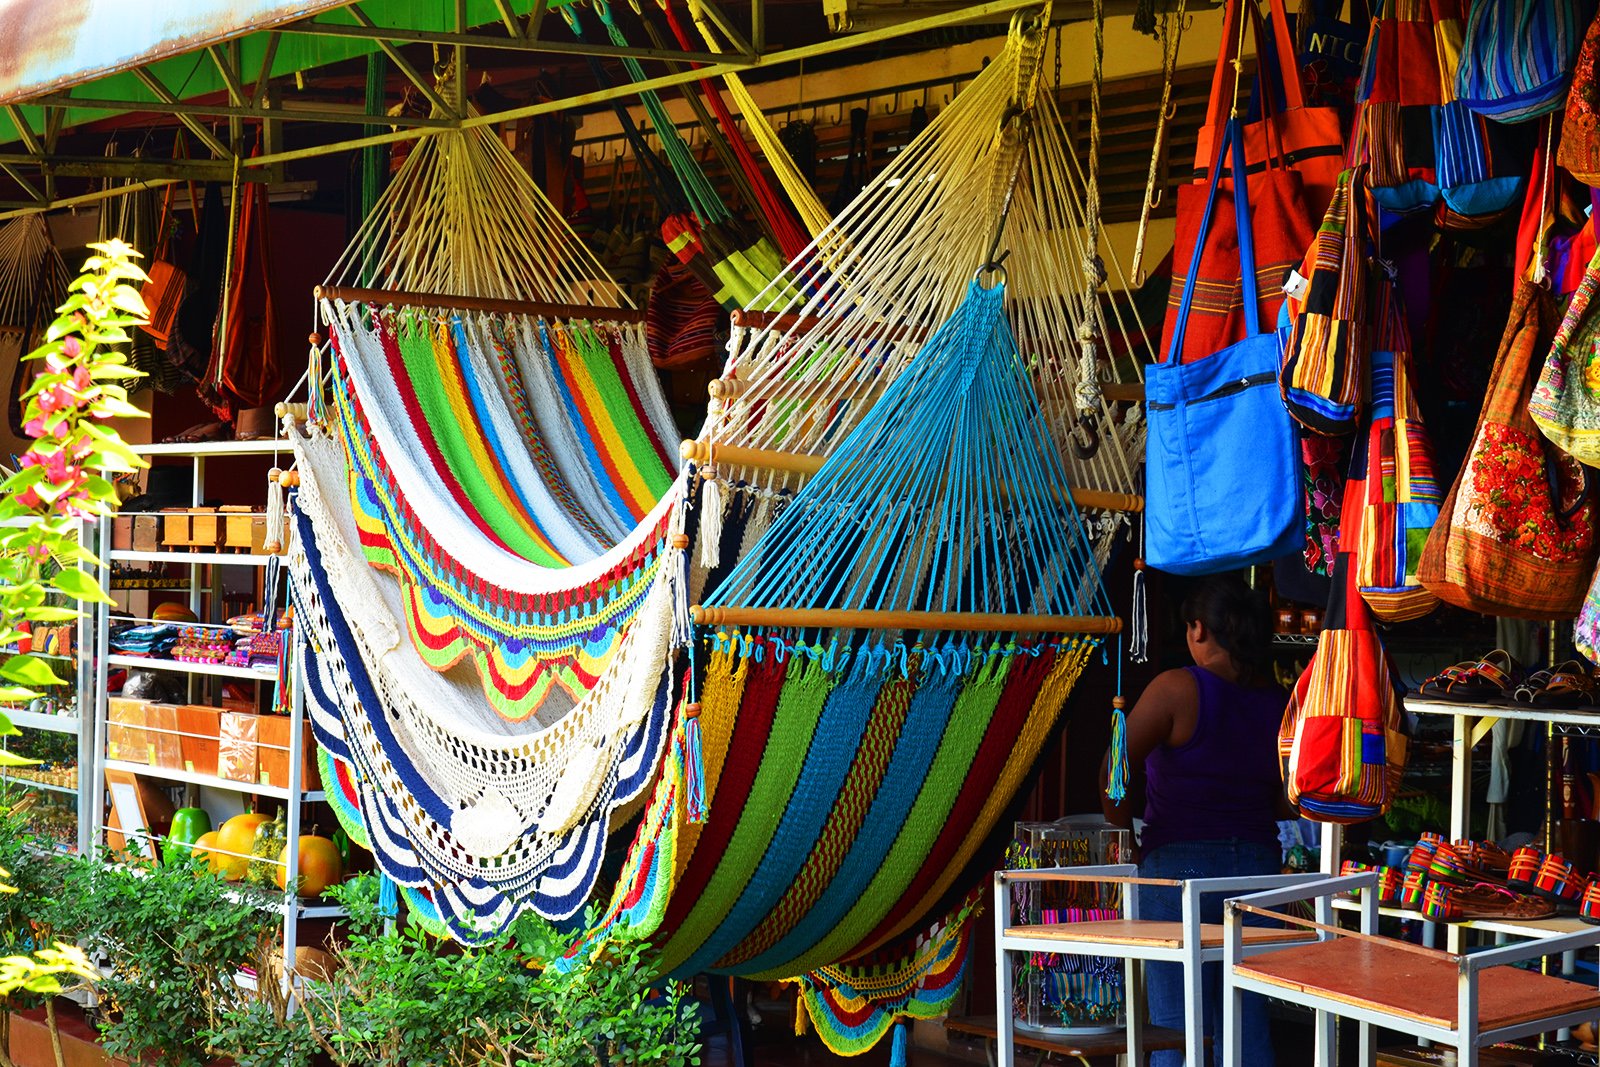 How to buy a hammock at Masaya market in Managua